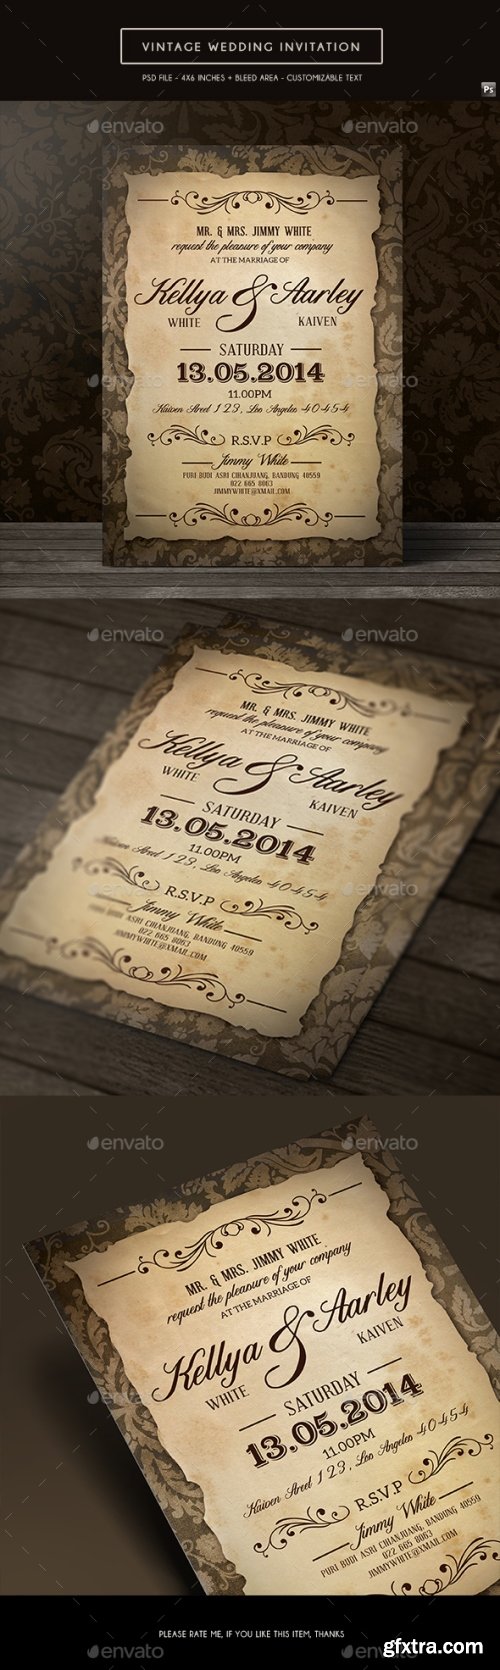 Graphicriver - Vintage Wedding Invitation 19267460